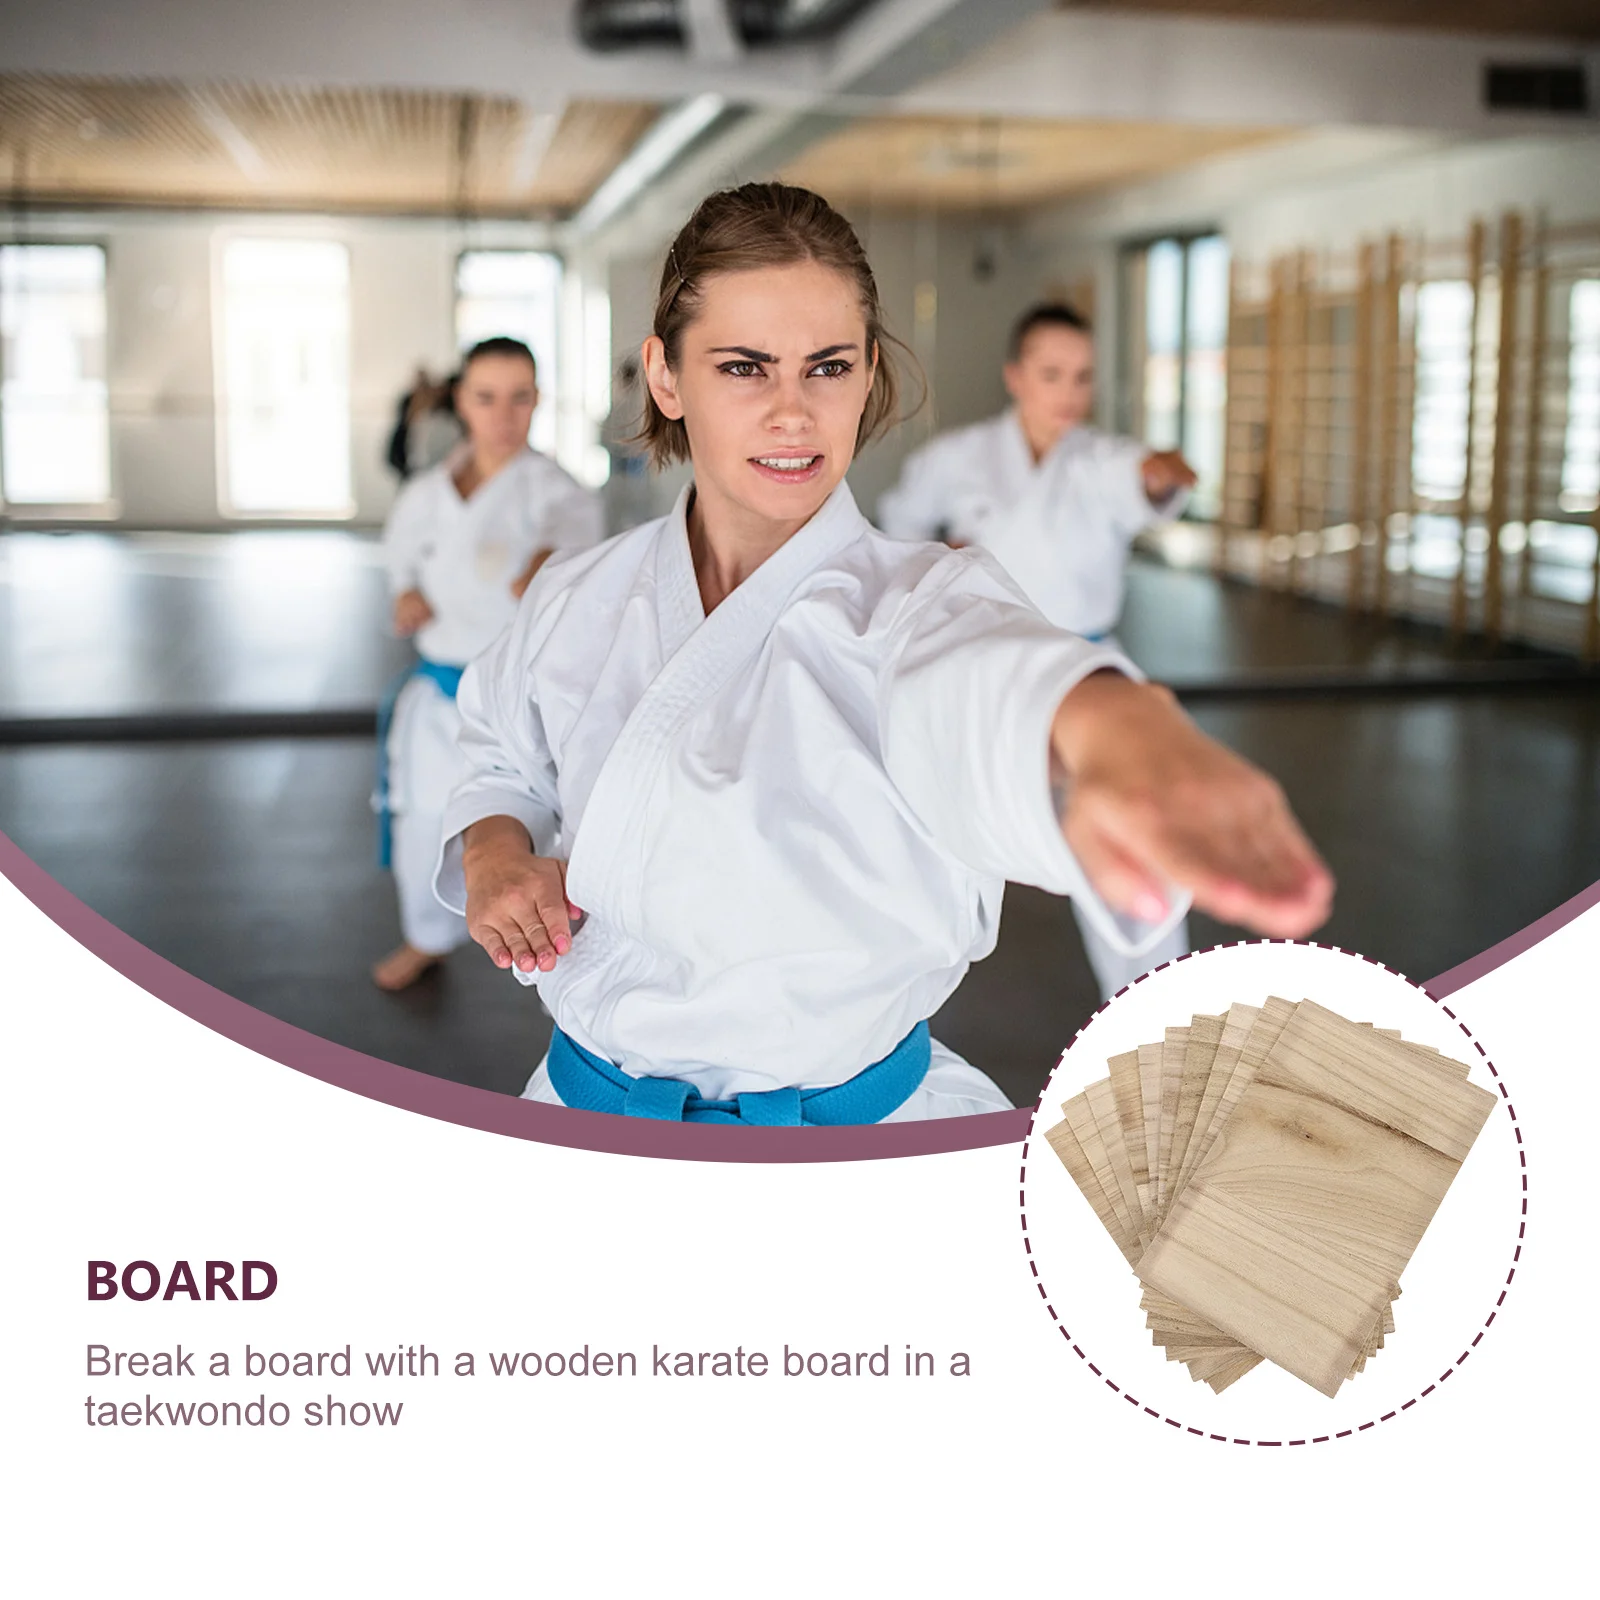 

Boards Breaking Taekwondo Board Woodkarate Plank Wooden Training Rebreakablepunching Professional Kick Performing Kids Planks